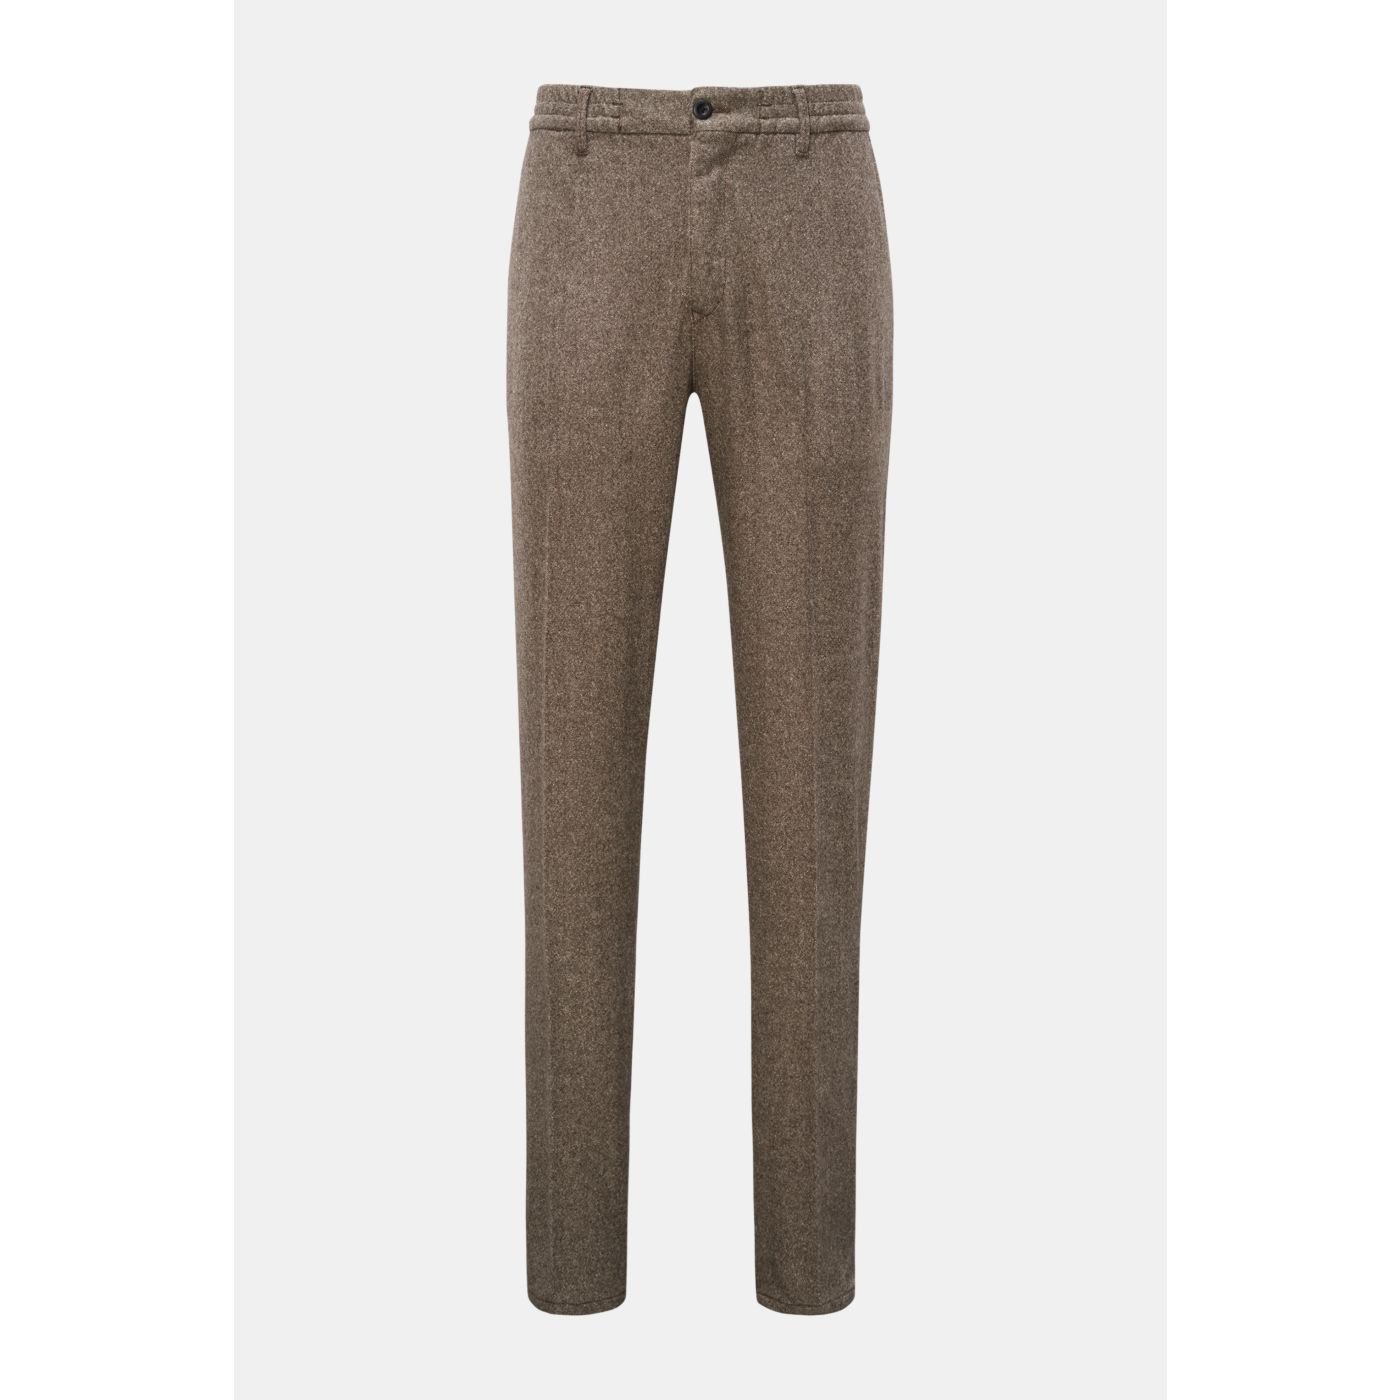 | BRAUN jogger Hamburg INCOTEX pants SLACKS flannel grey-brown